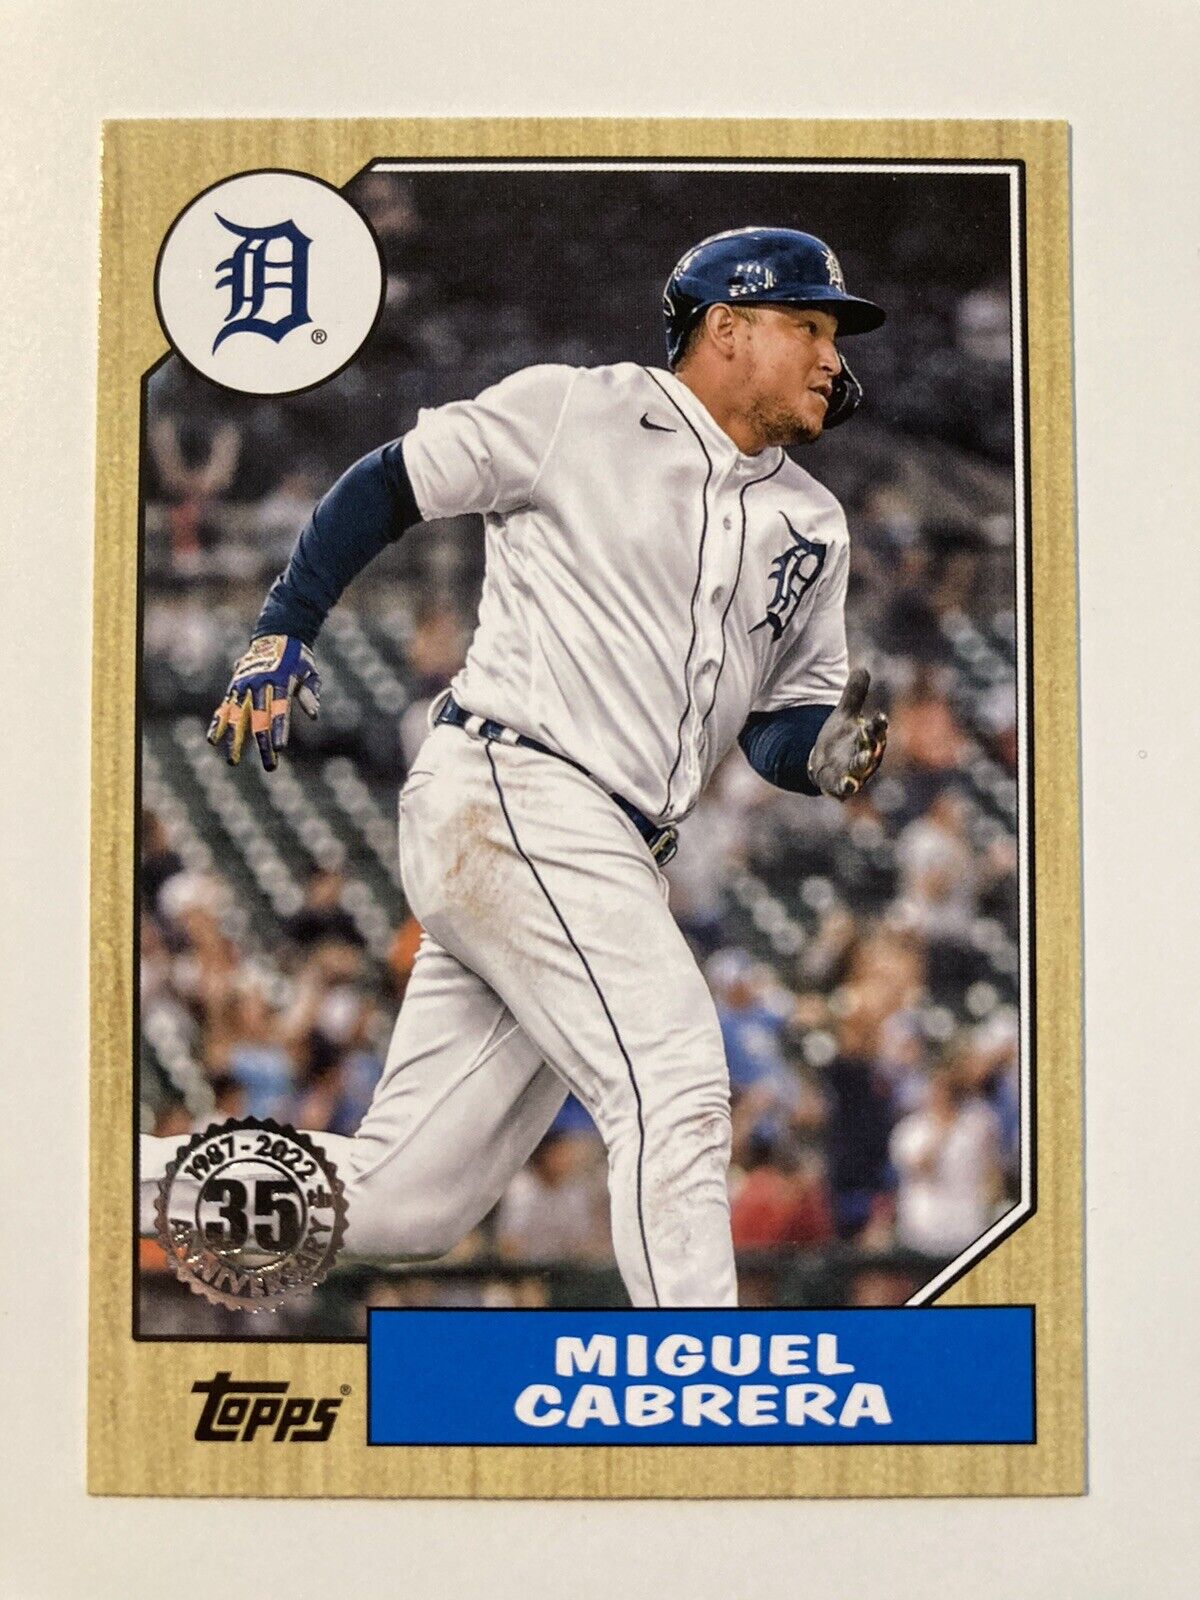 Miguel Cabrera 35th Anniversary Insert Card# T87-83 Tigers